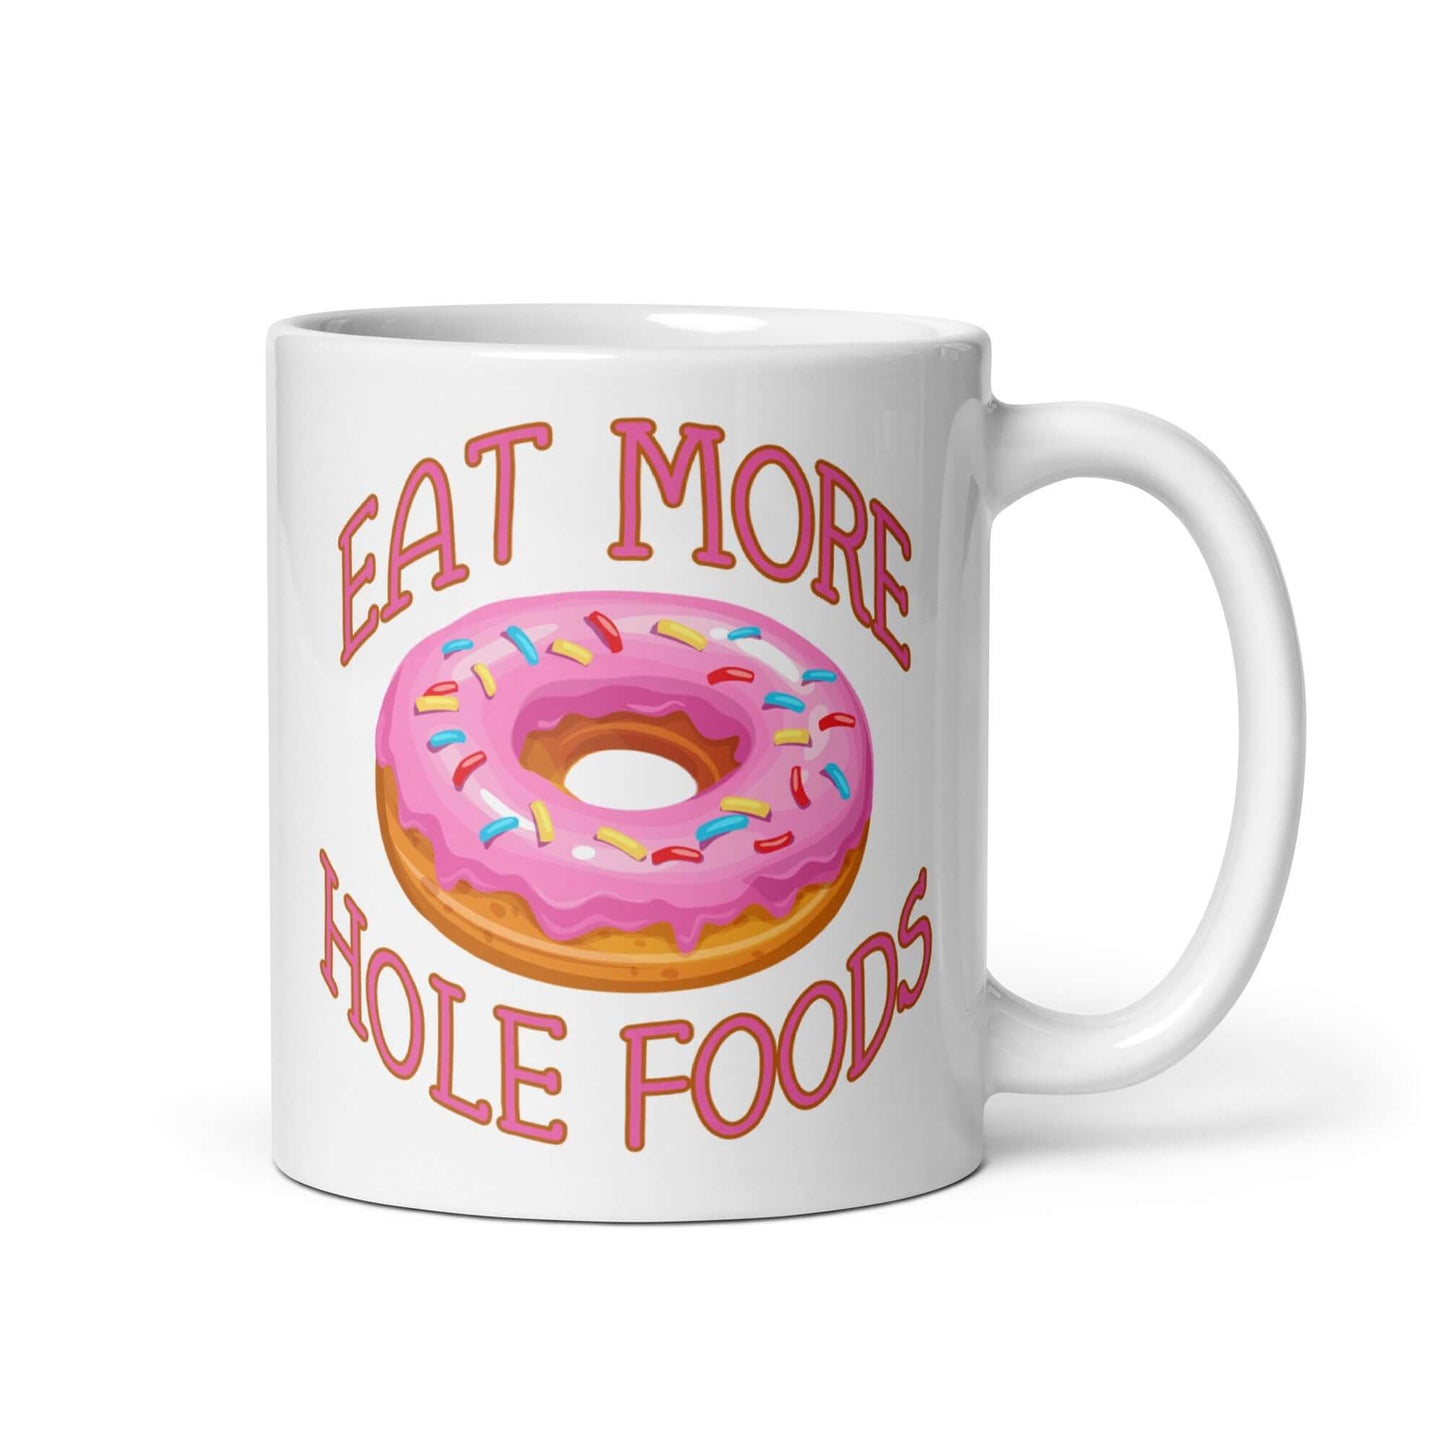 Eat more hole foods donut pun mug